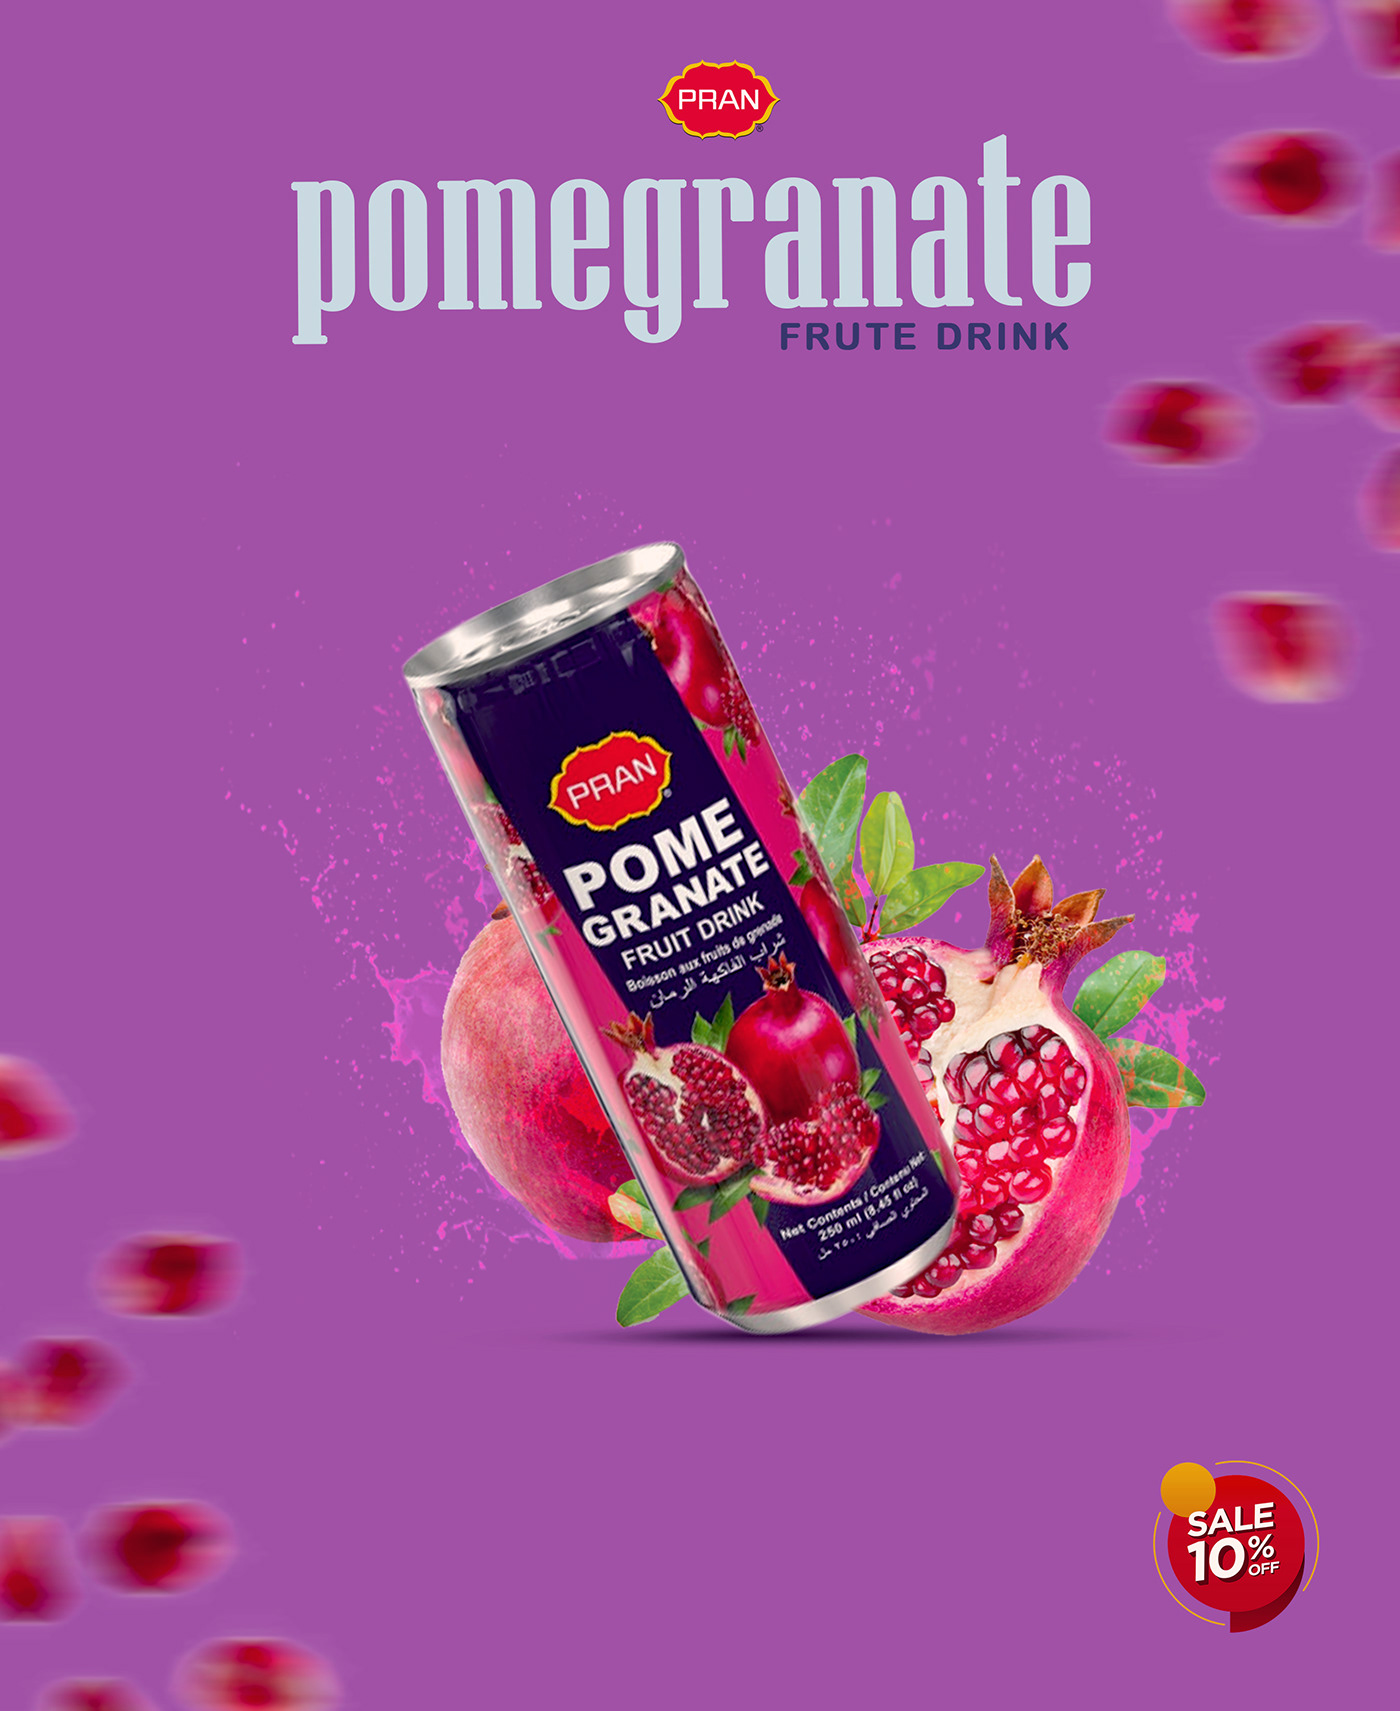 drink colddrink juice Socialmedia design pomegranate pranfood